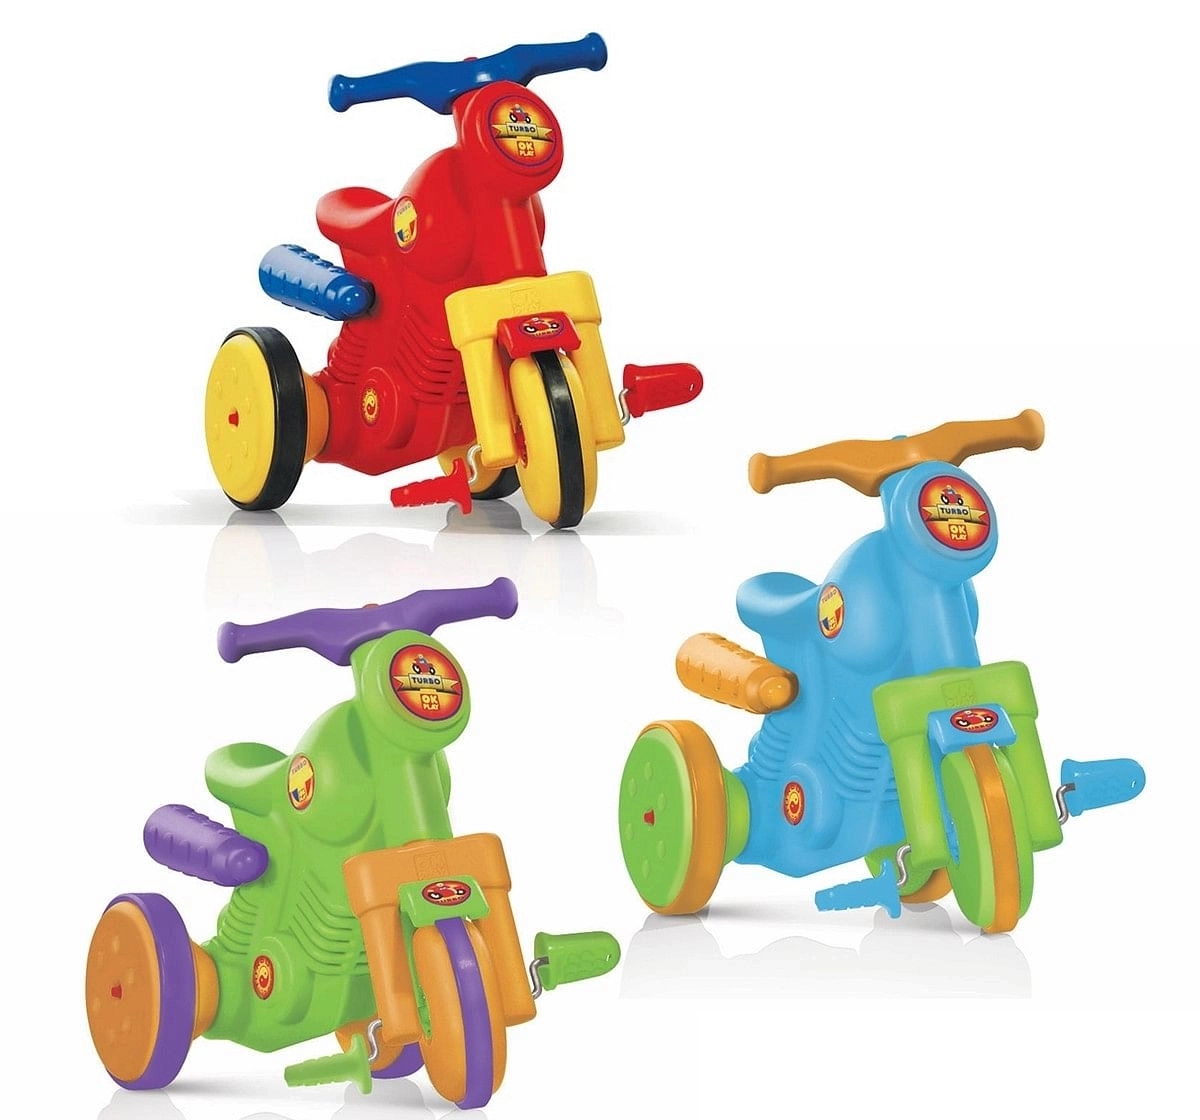 Ok Play Turbo Bike for Kids Red 3Y+